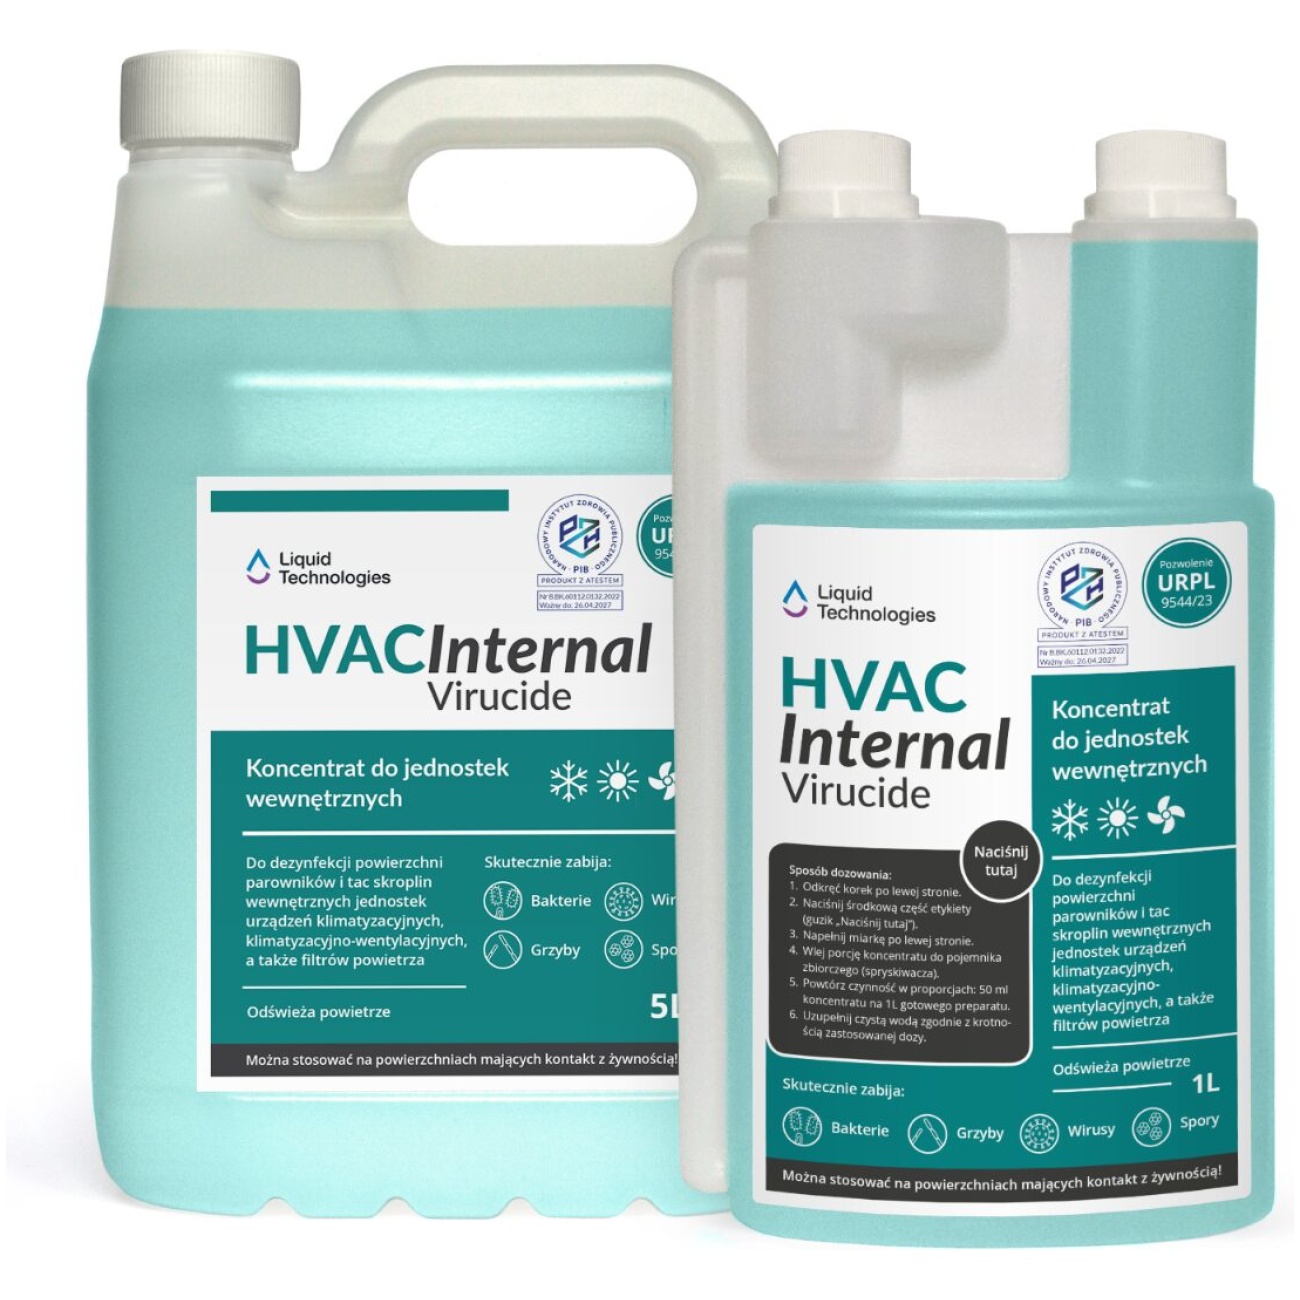 Środek do dezynfekcji klimatyzacji koncentrat 1 L - Liquid Technologies HVAC Internal Virucide